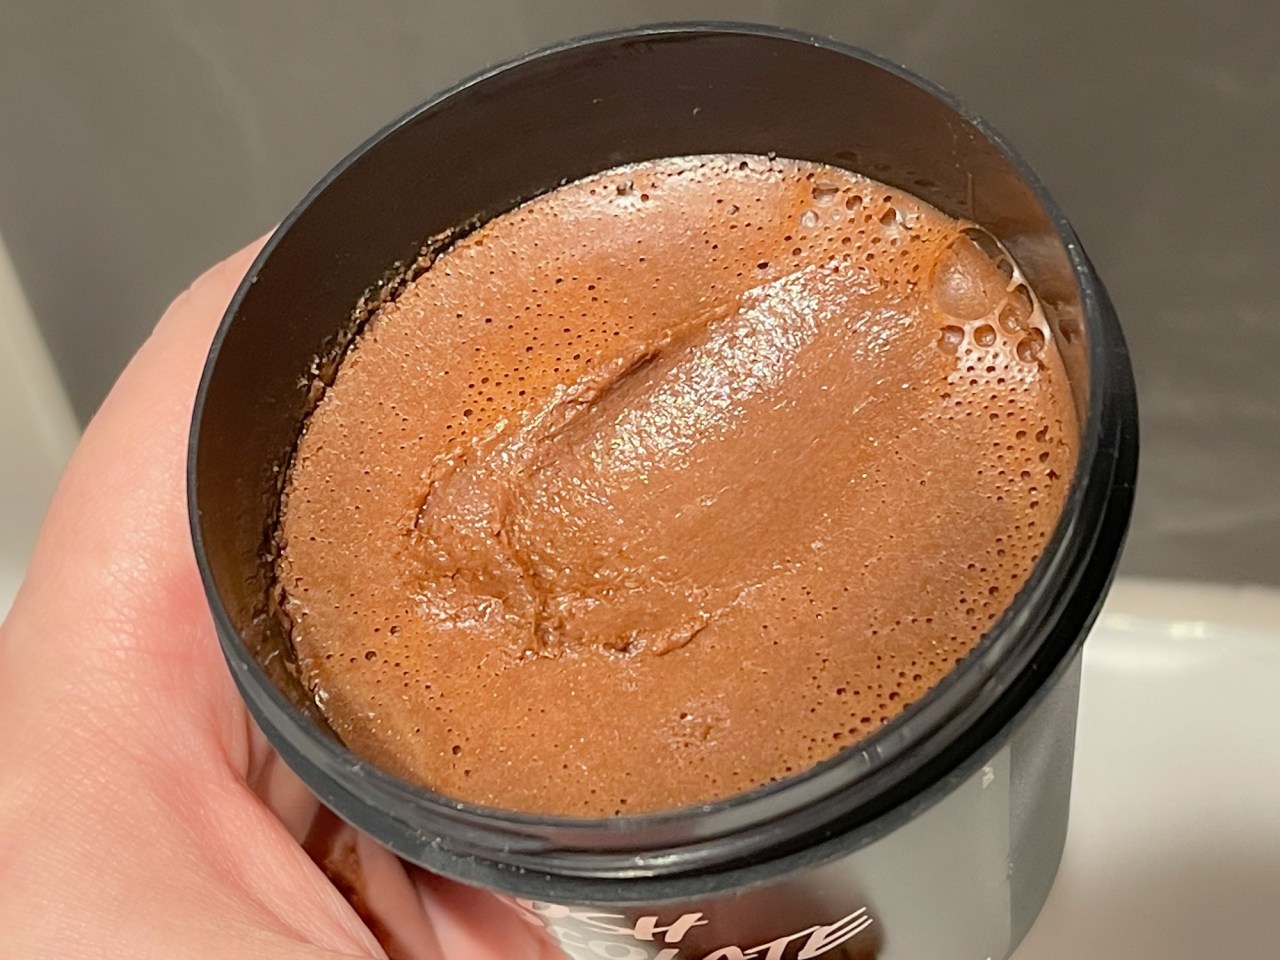 Inside Pot of Lush Posh Chocolate Body Wash